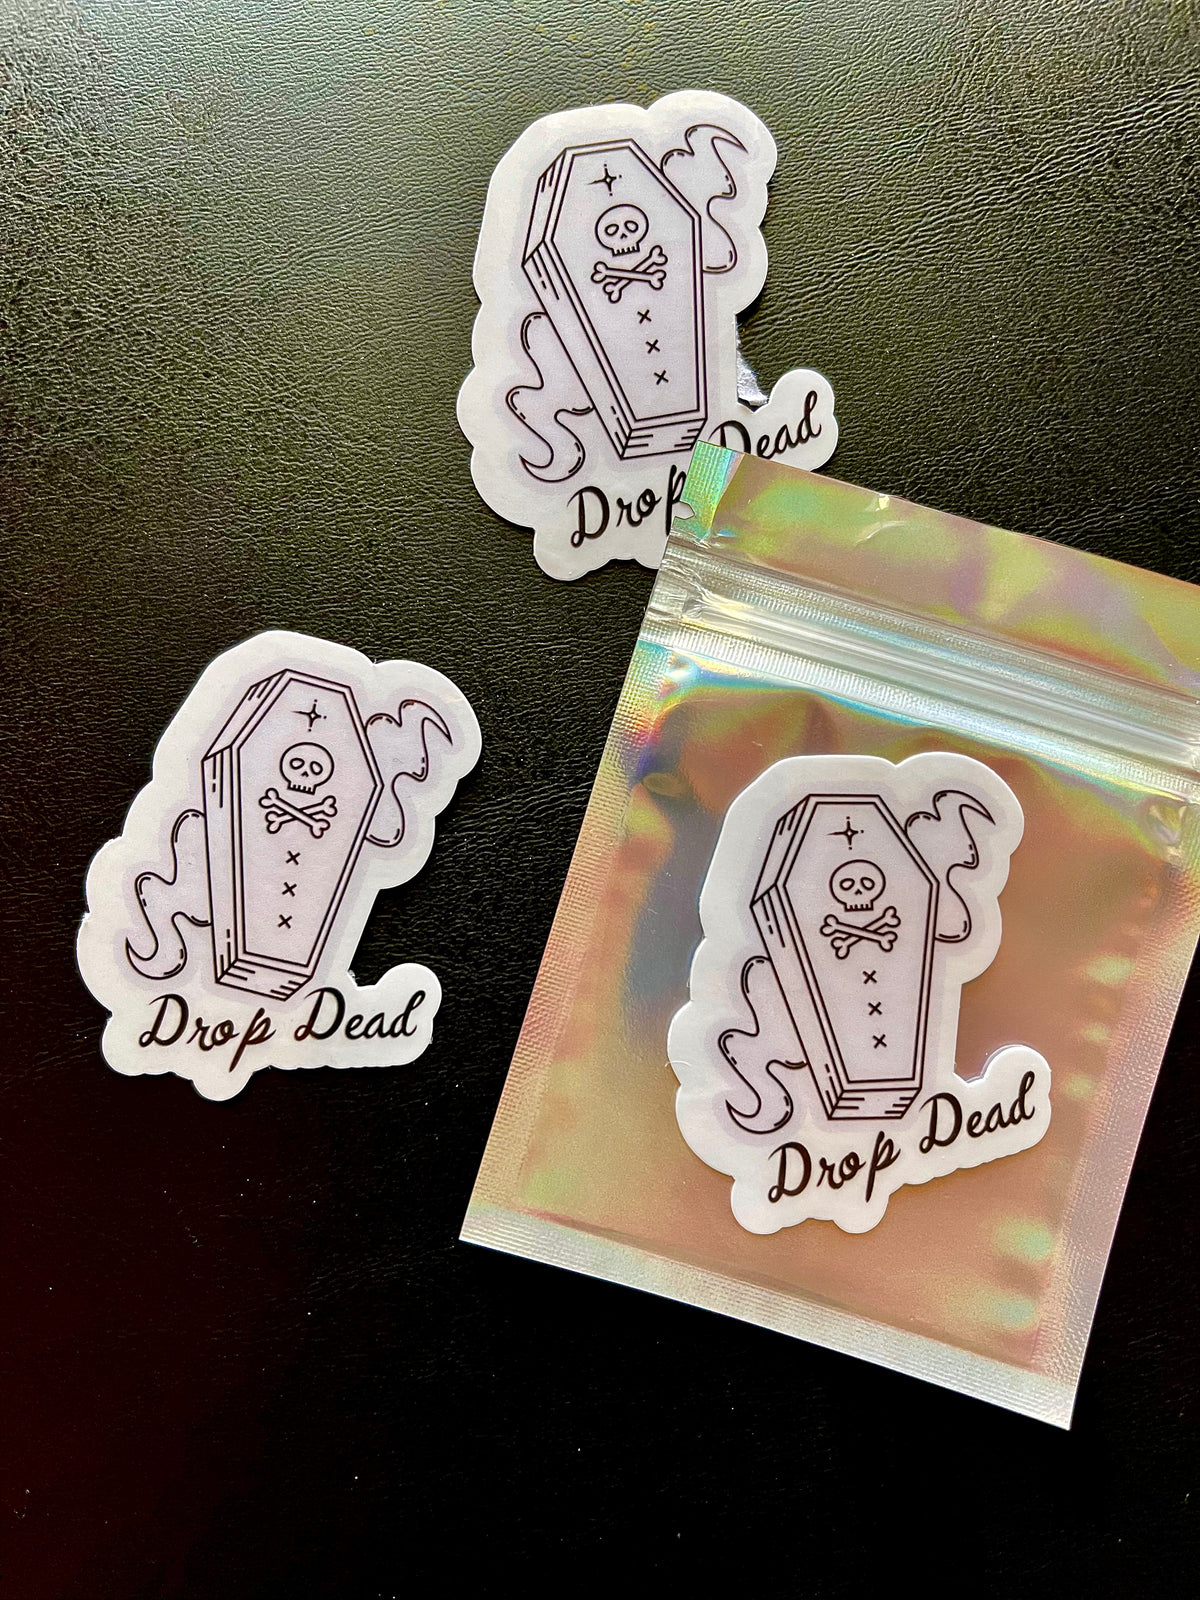 Drop Dead Vinyl Sticker